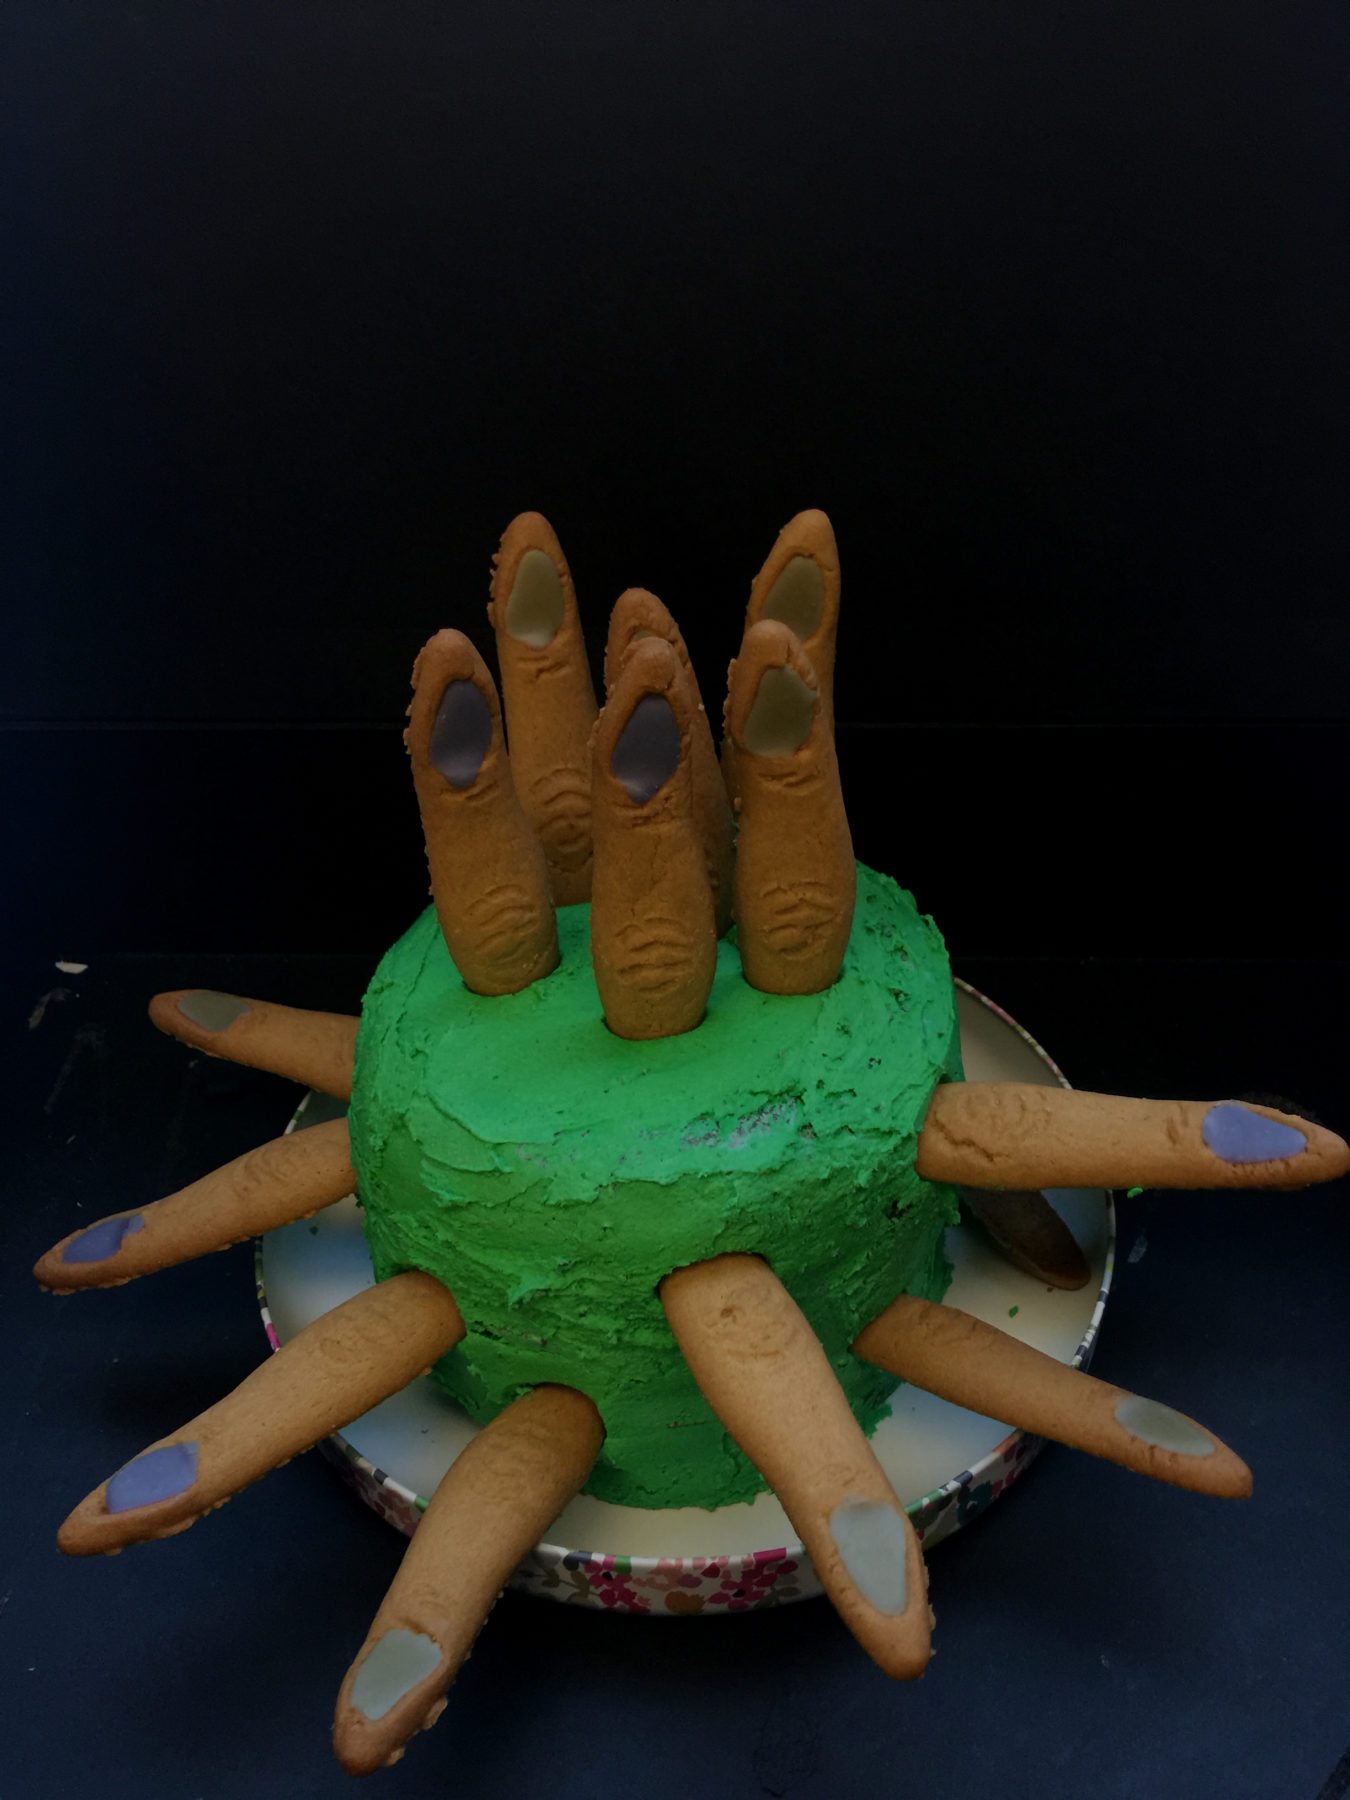 Grotbag's Halloween Cake